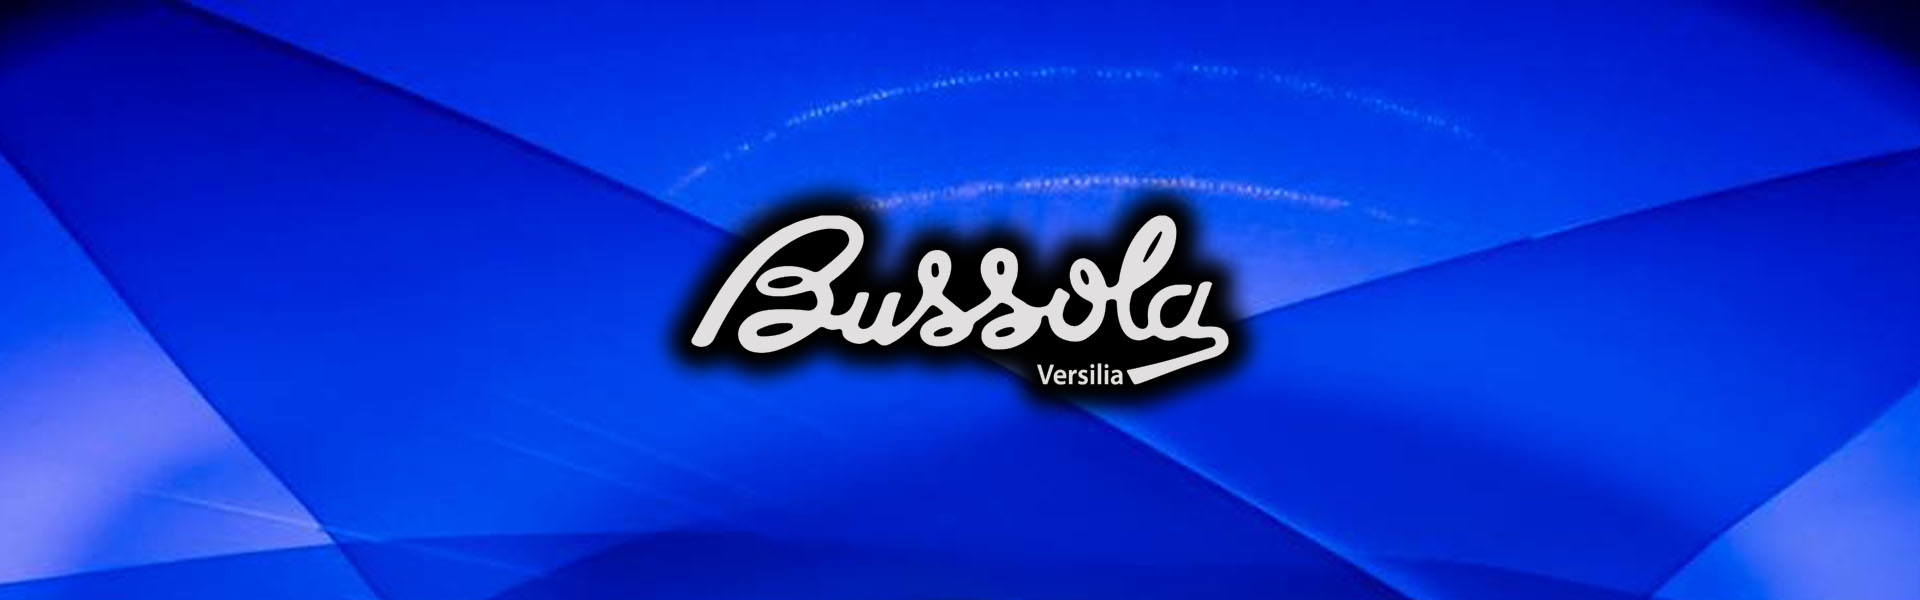 Bussola Versilia - Marina di Pietrasanta